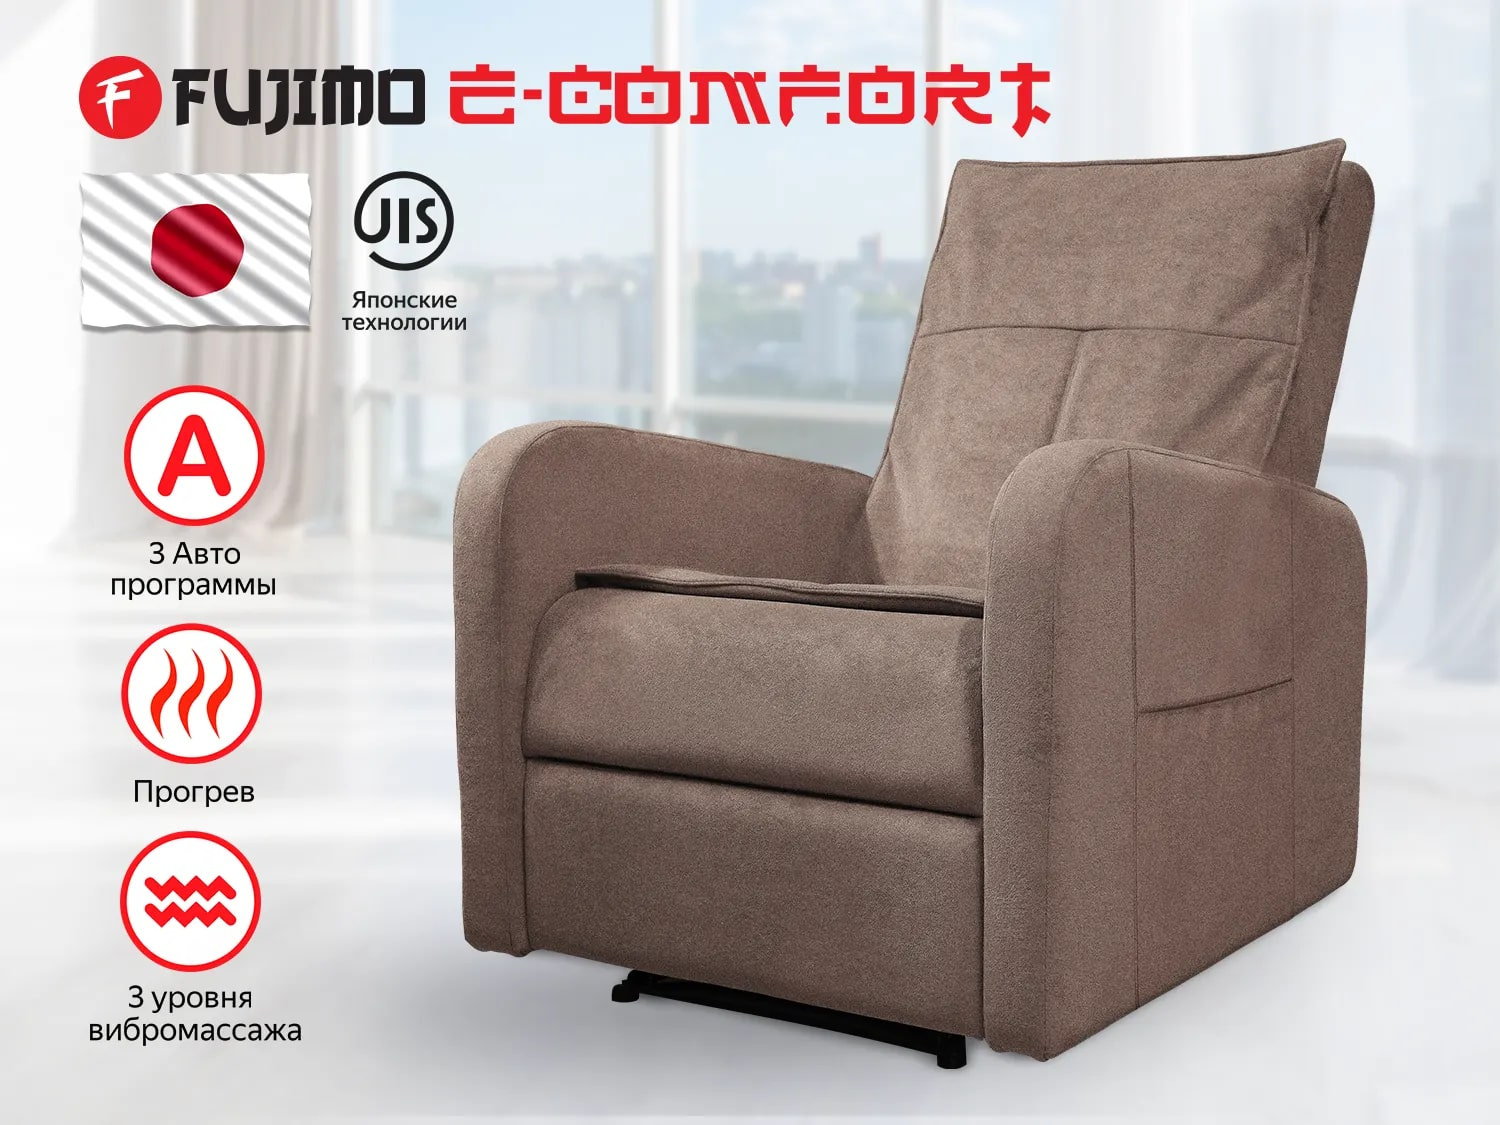 E-COMFORT CHAIR F3005 FEF с электроприводом Терра в СПб по цене 72000 ₽ в категории массажные кресла Fujimo